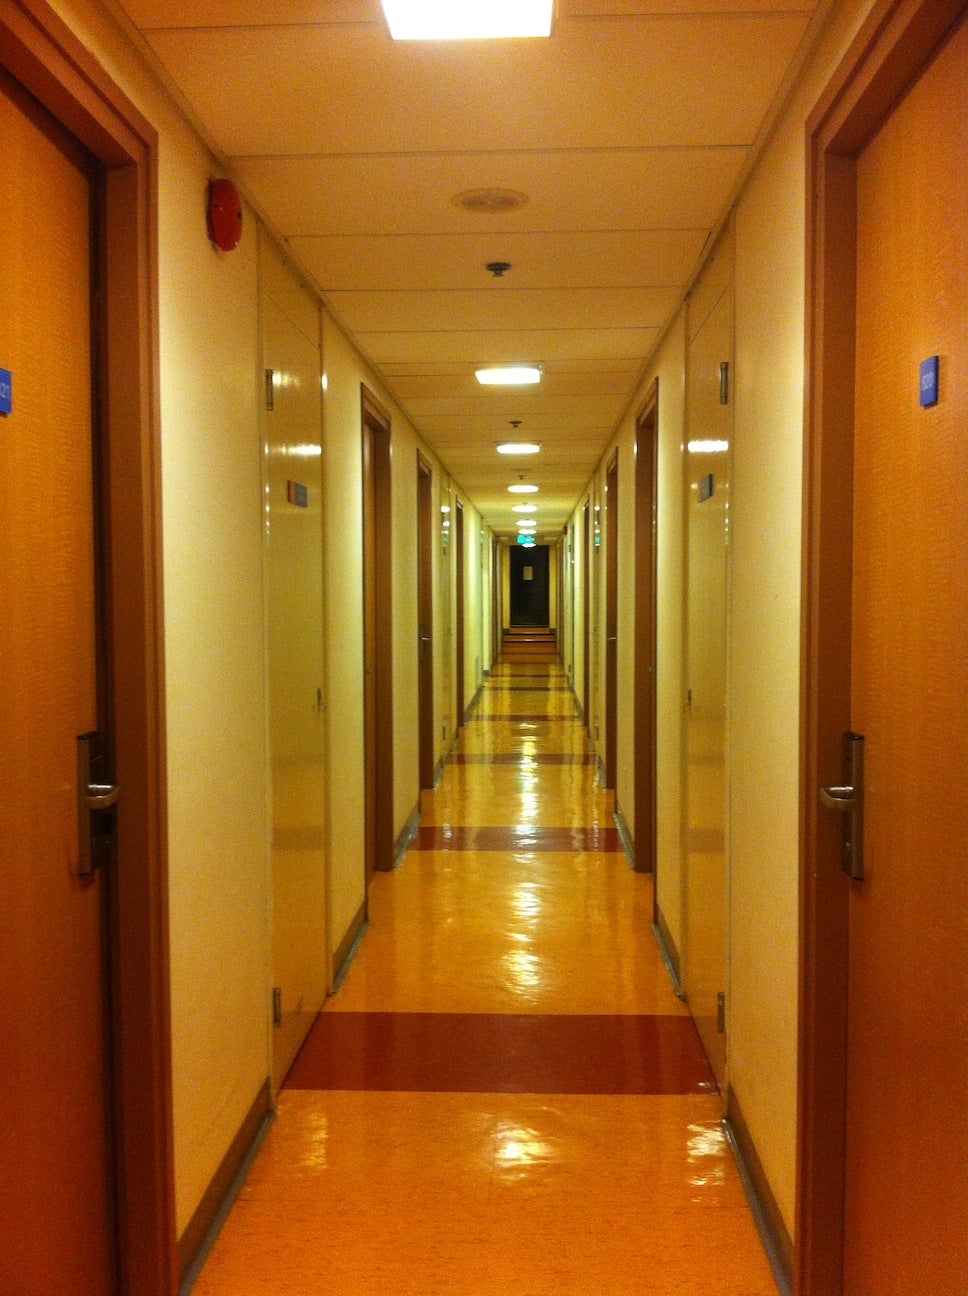 residence hall corridor at HKUST